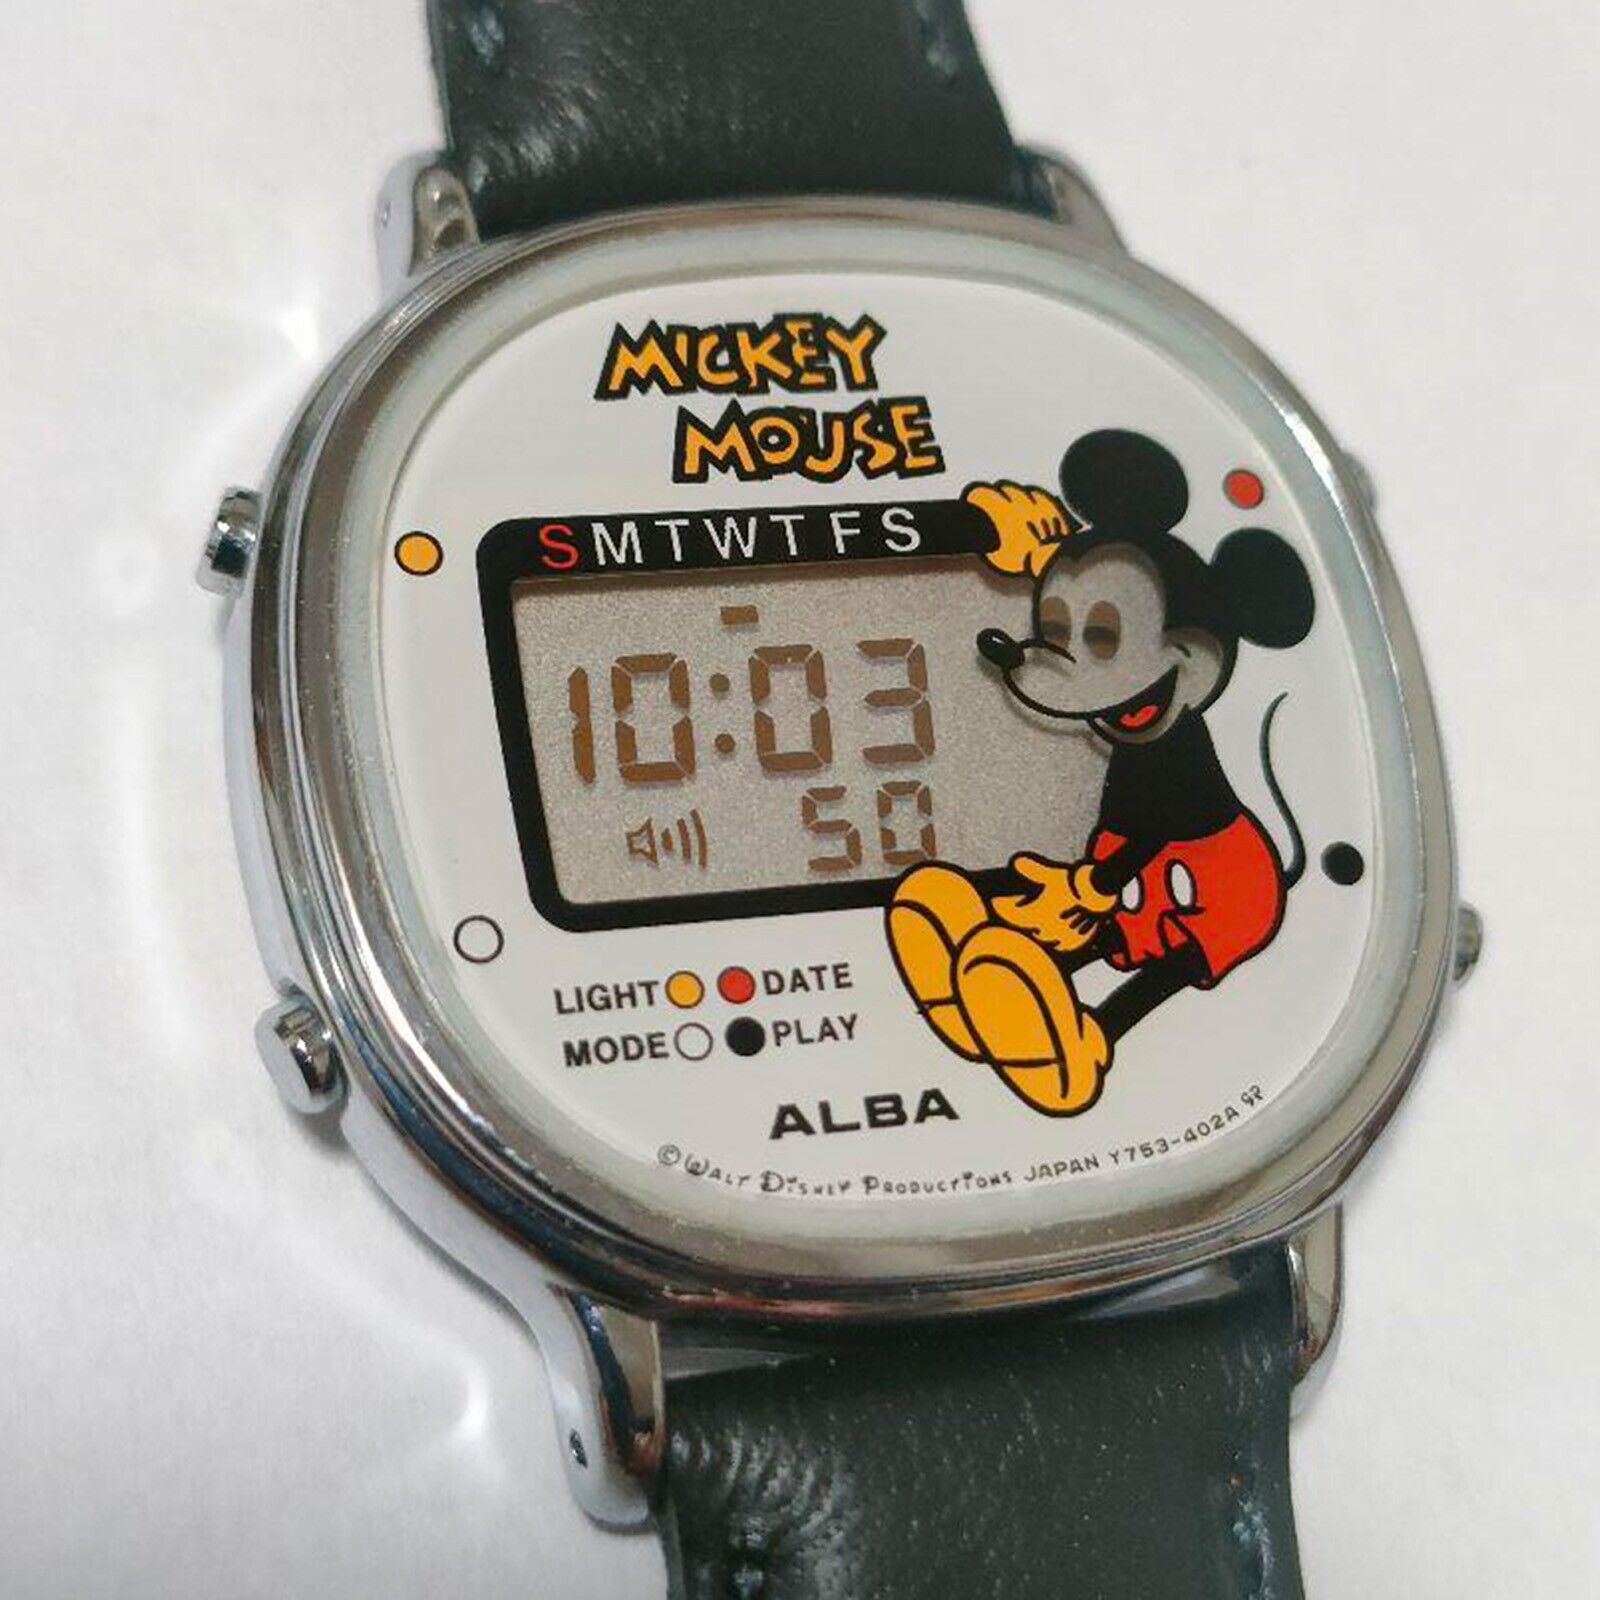 SEIKO ALBA DISNEY MICKEY MOUSE Digital Watch Wristwatch SP050A WATER RESIST Mint